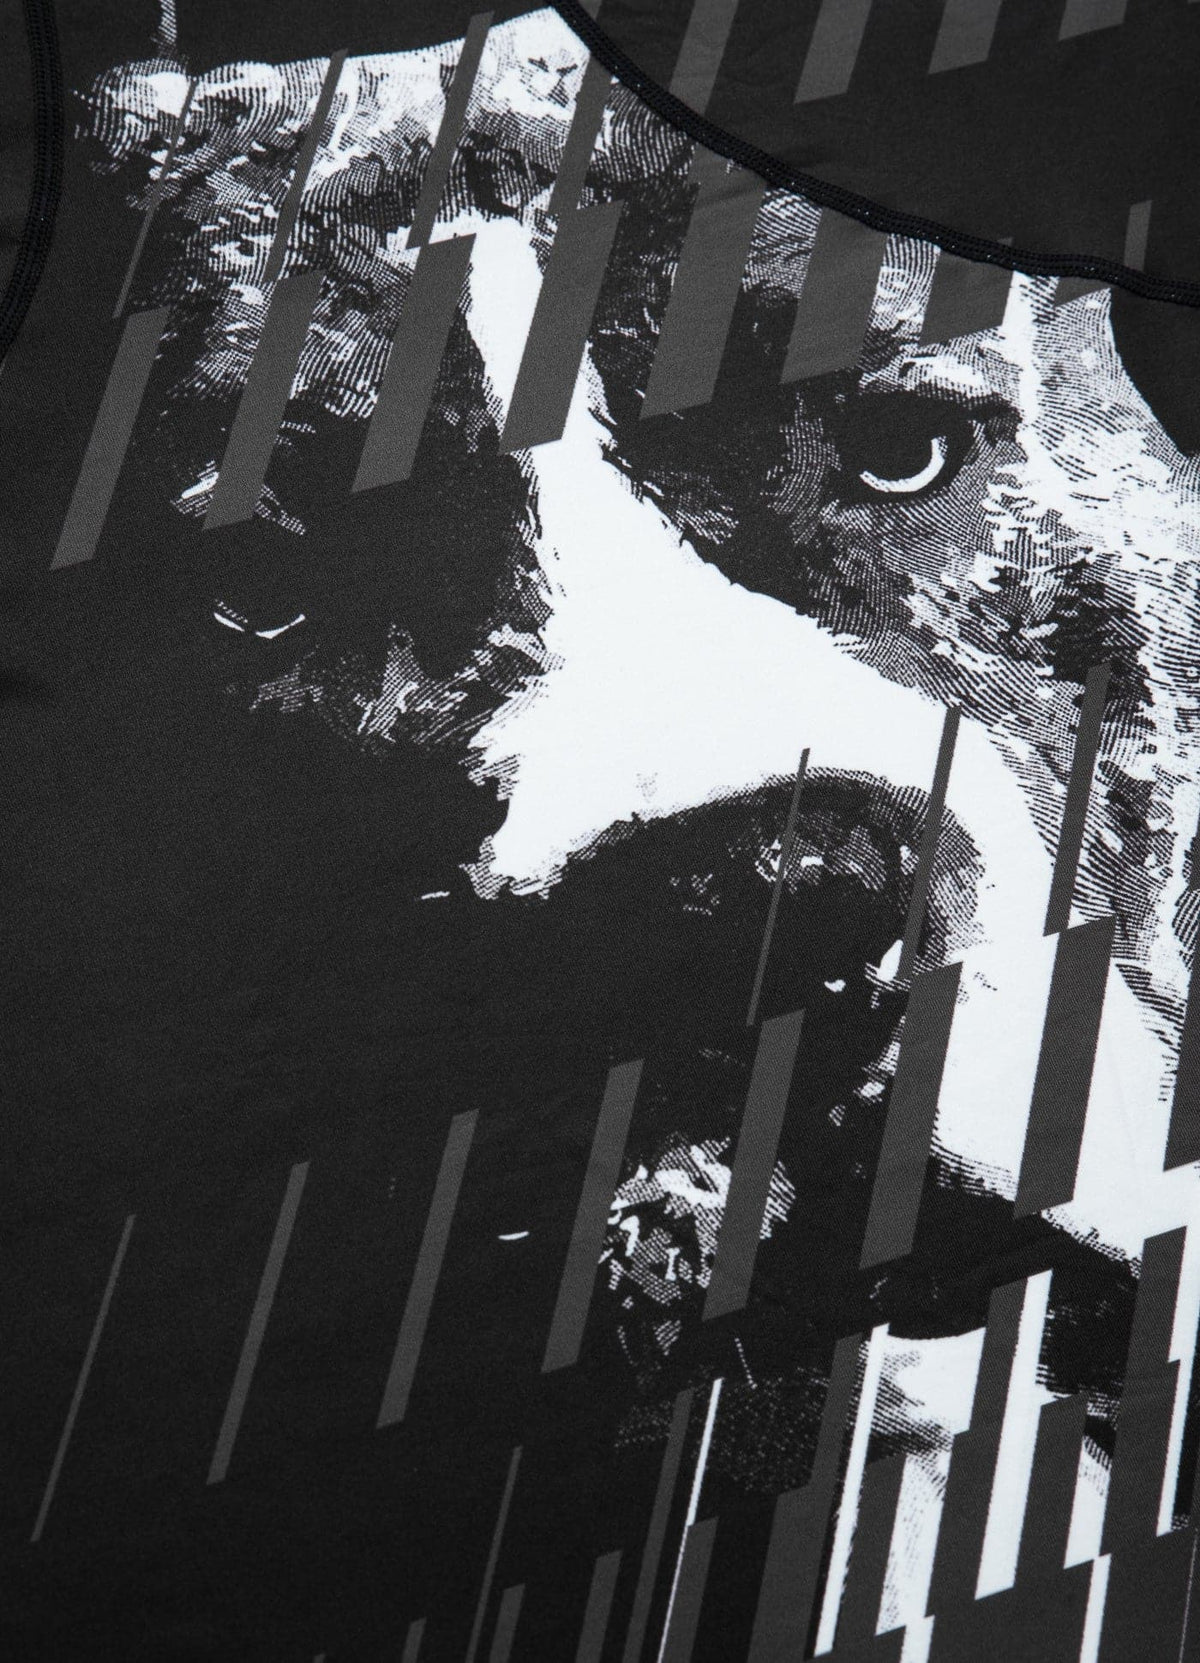 STREET DOG Black Mesh Longsleeve T-shirt - Pitbull West Coast International Store 